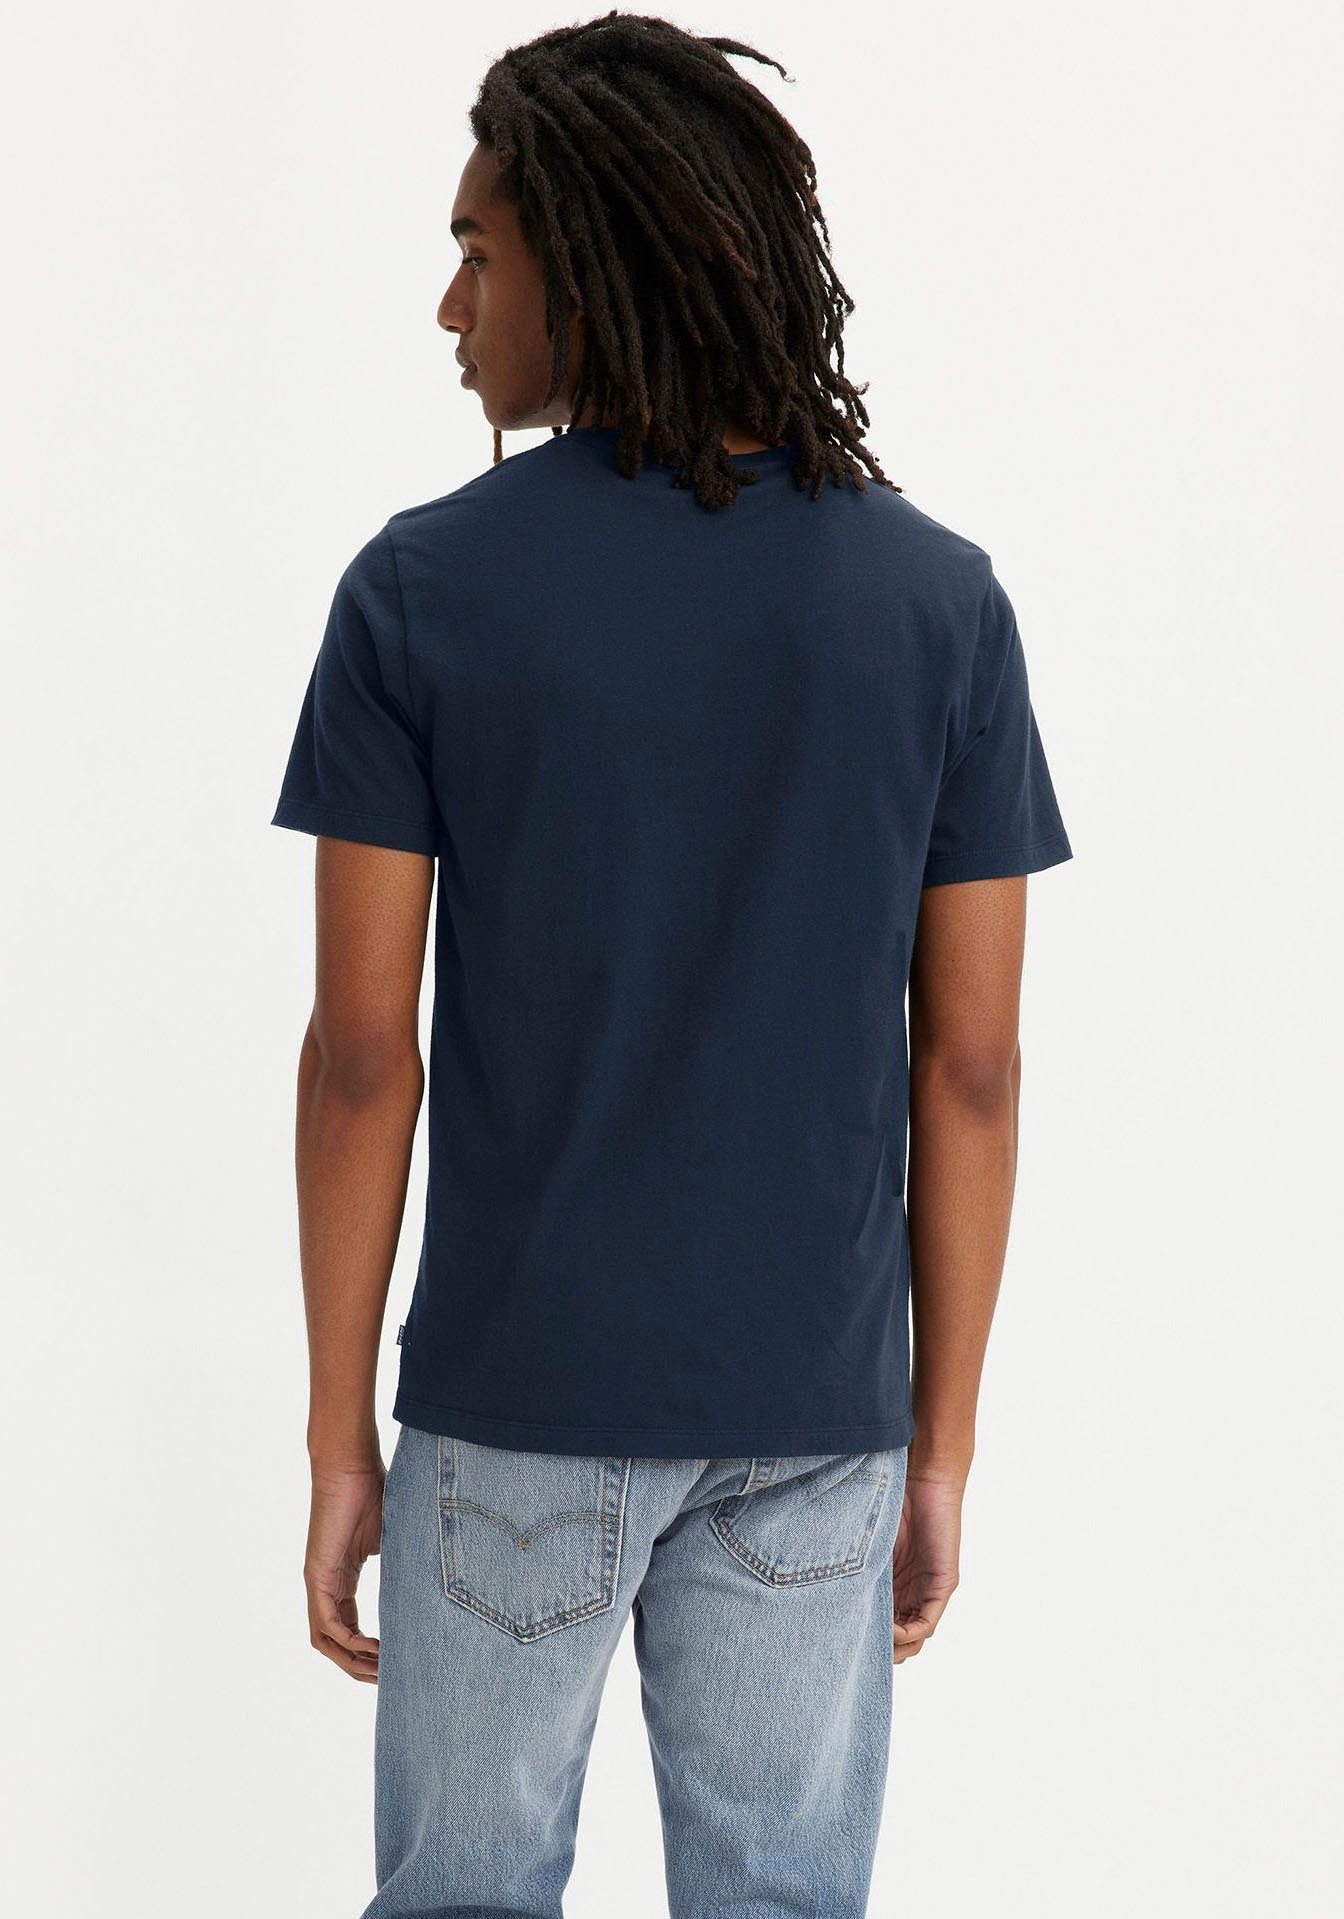 Logo-Front-Print TEE CREWNECK blau T-Shirt mit Levi's®